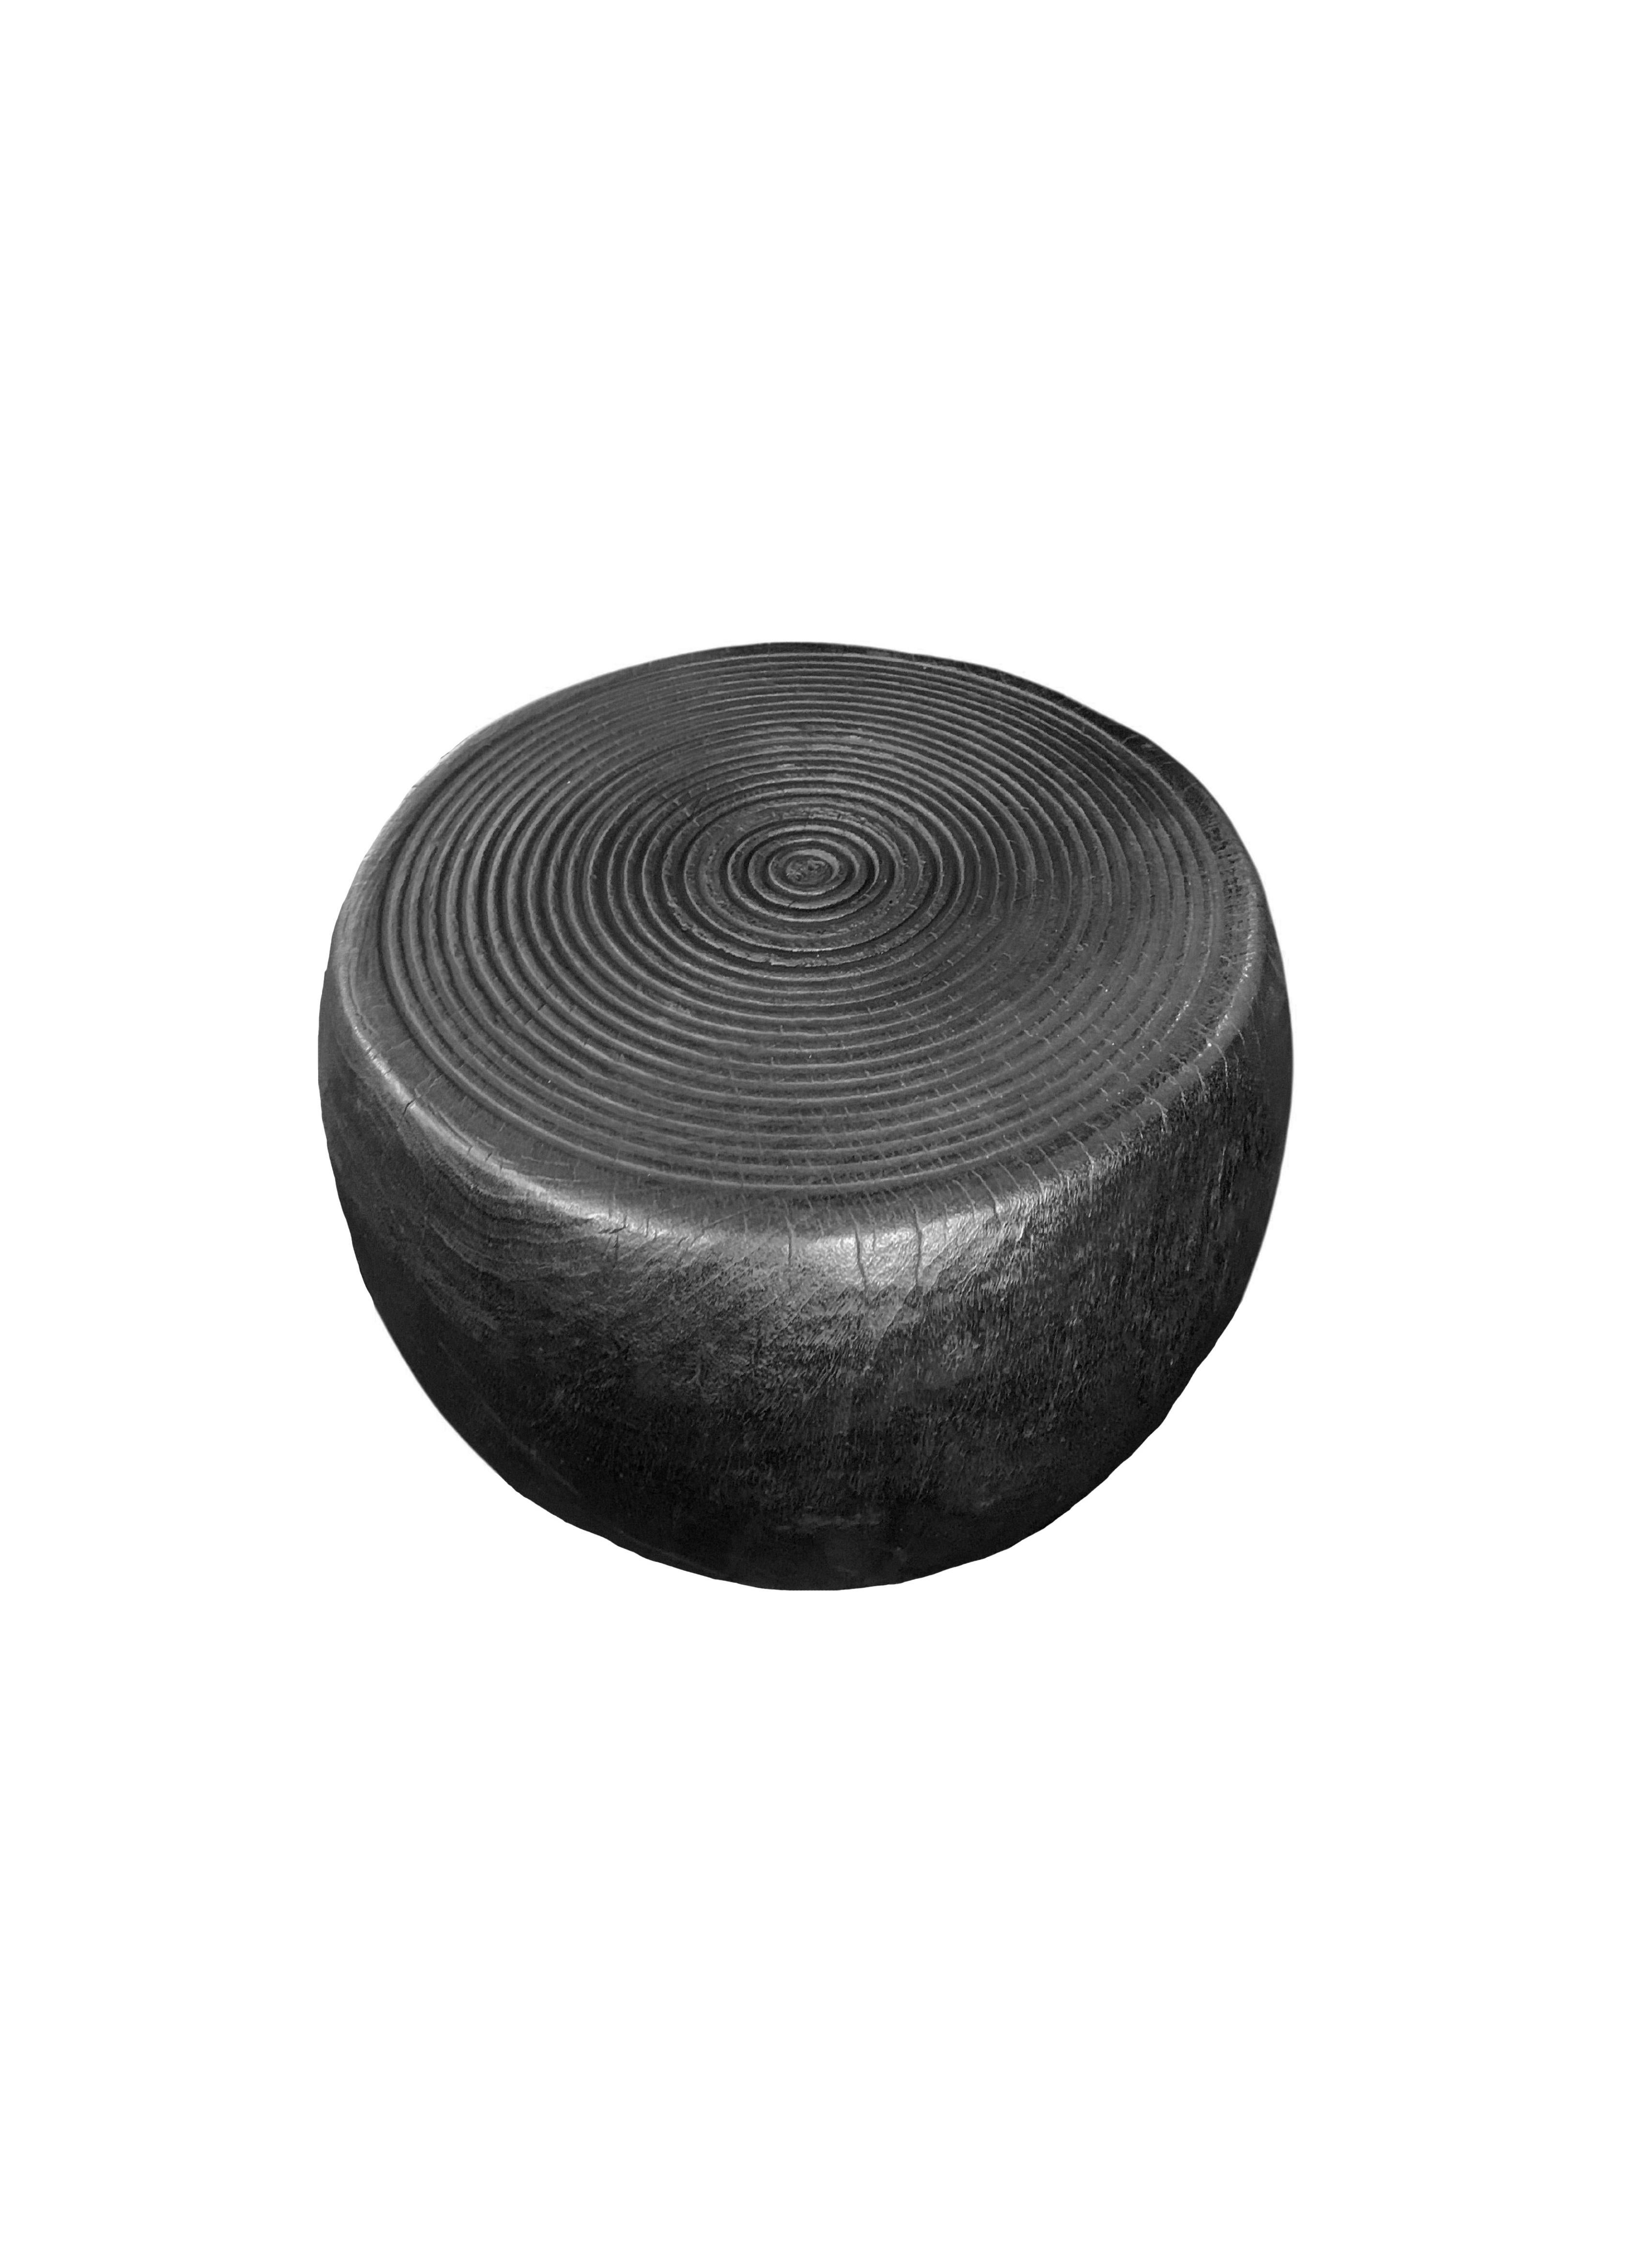 Organic Modern Sculptural Side Table Solid Mango Wood, Carved Ribbed Detailing & Burnt Finish For Sale